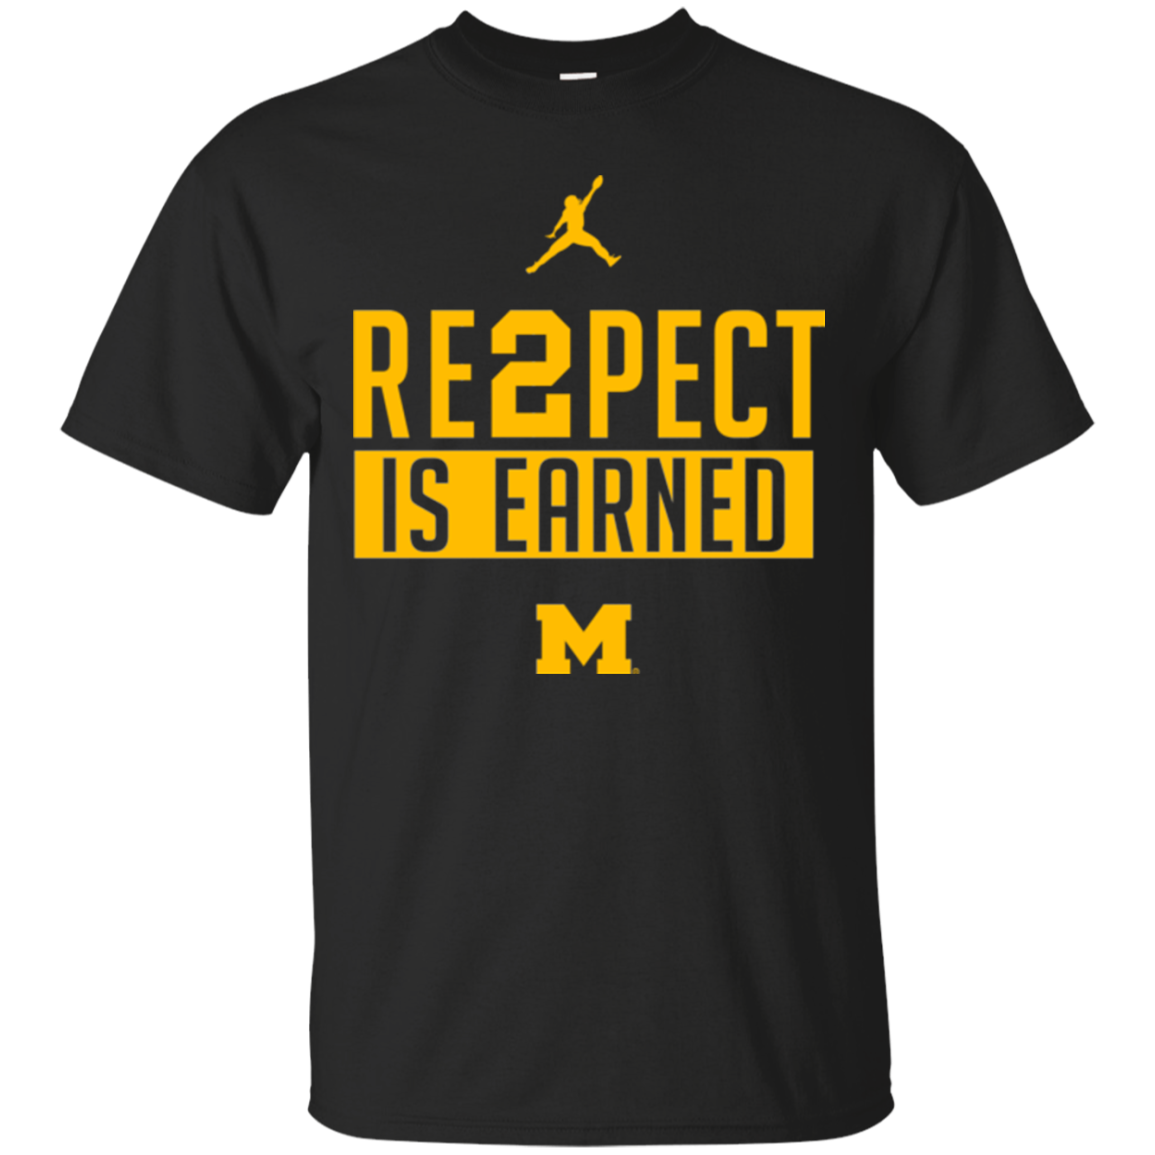 Michigan Football Shirts Re2pect Is Earned - Baby Kools